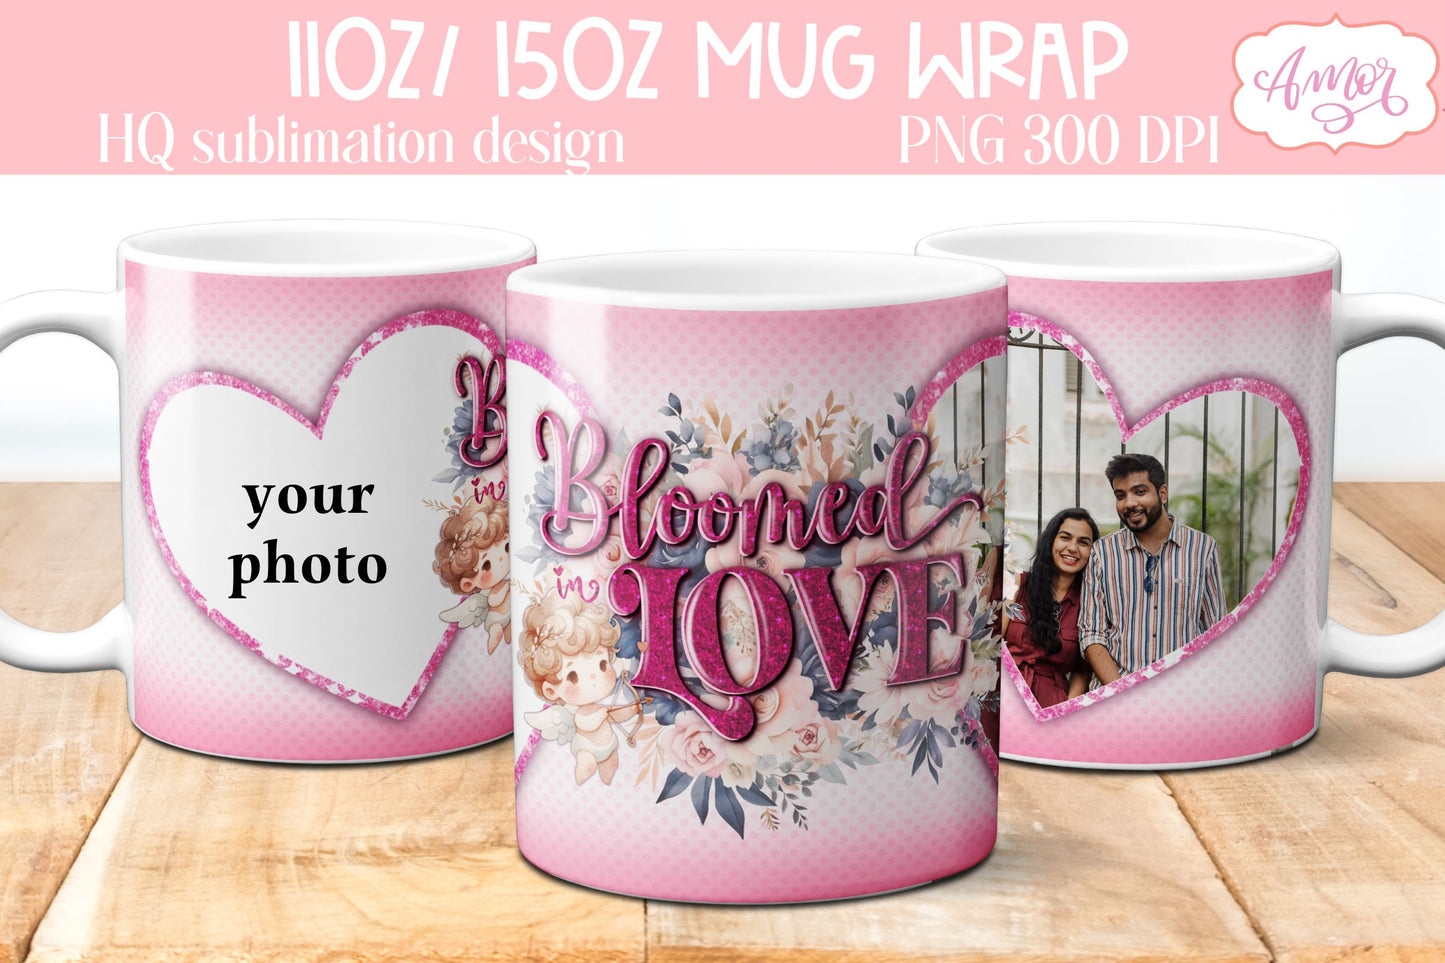 BUNDLE Valentines Photo Mug Wrap PNG sublimation templates